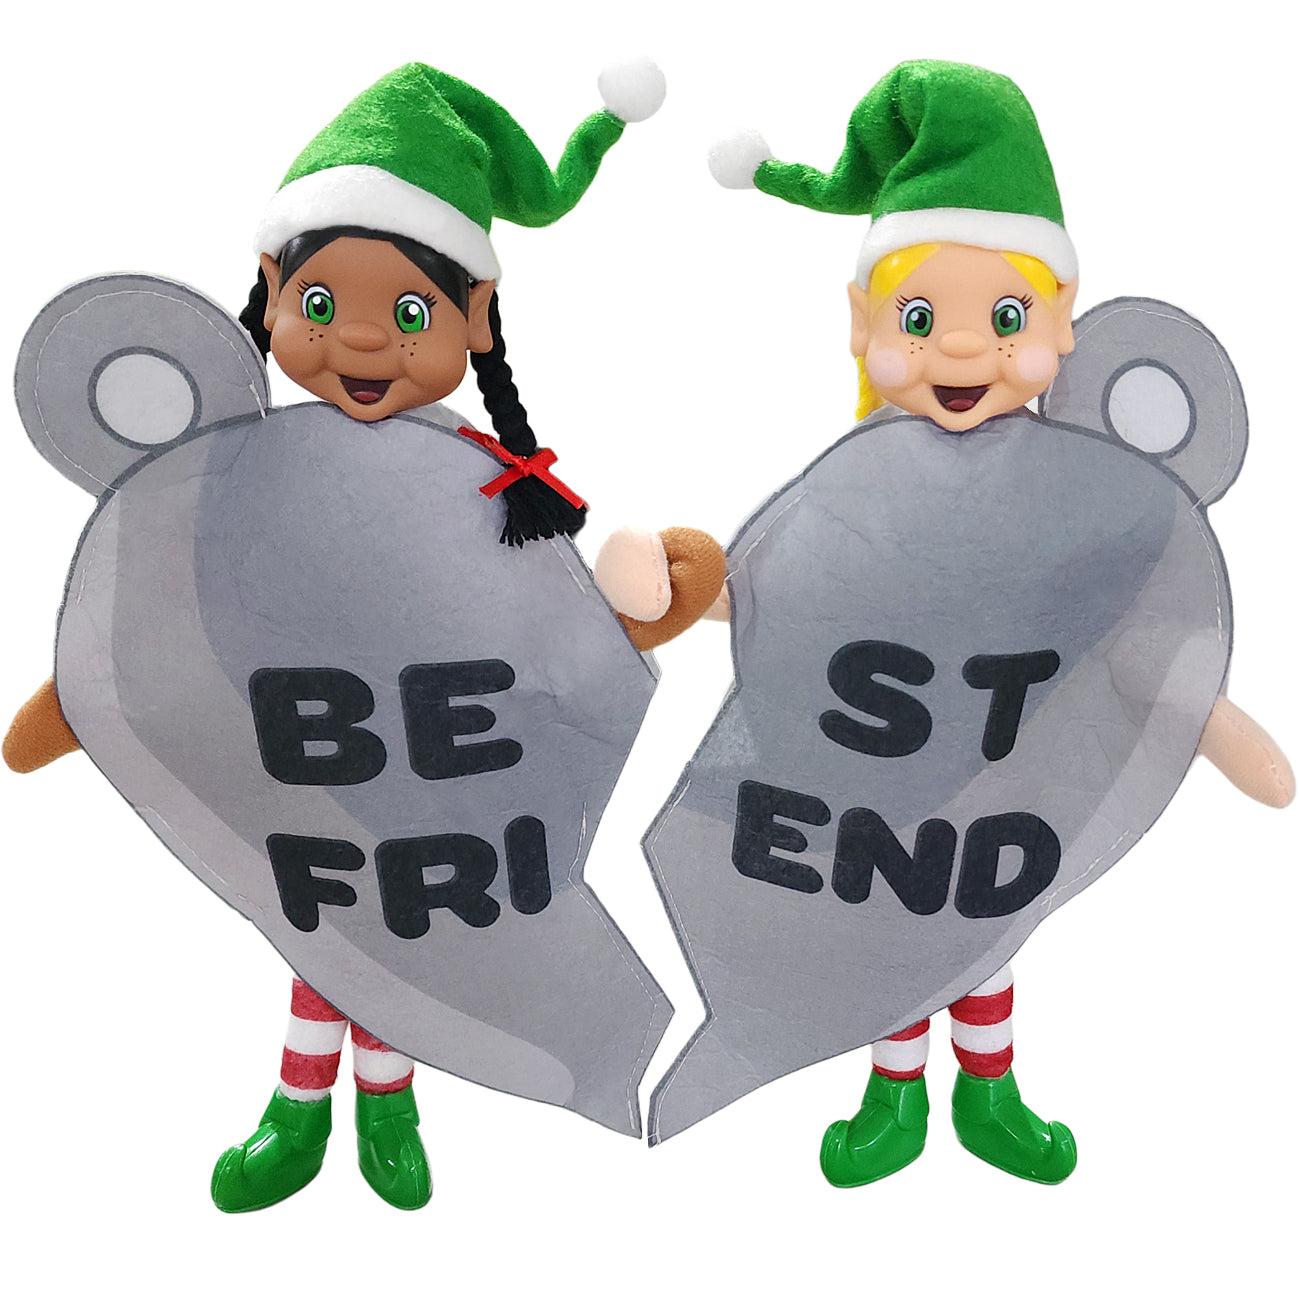 Best Friends Elf Outfit - My Elf Friends